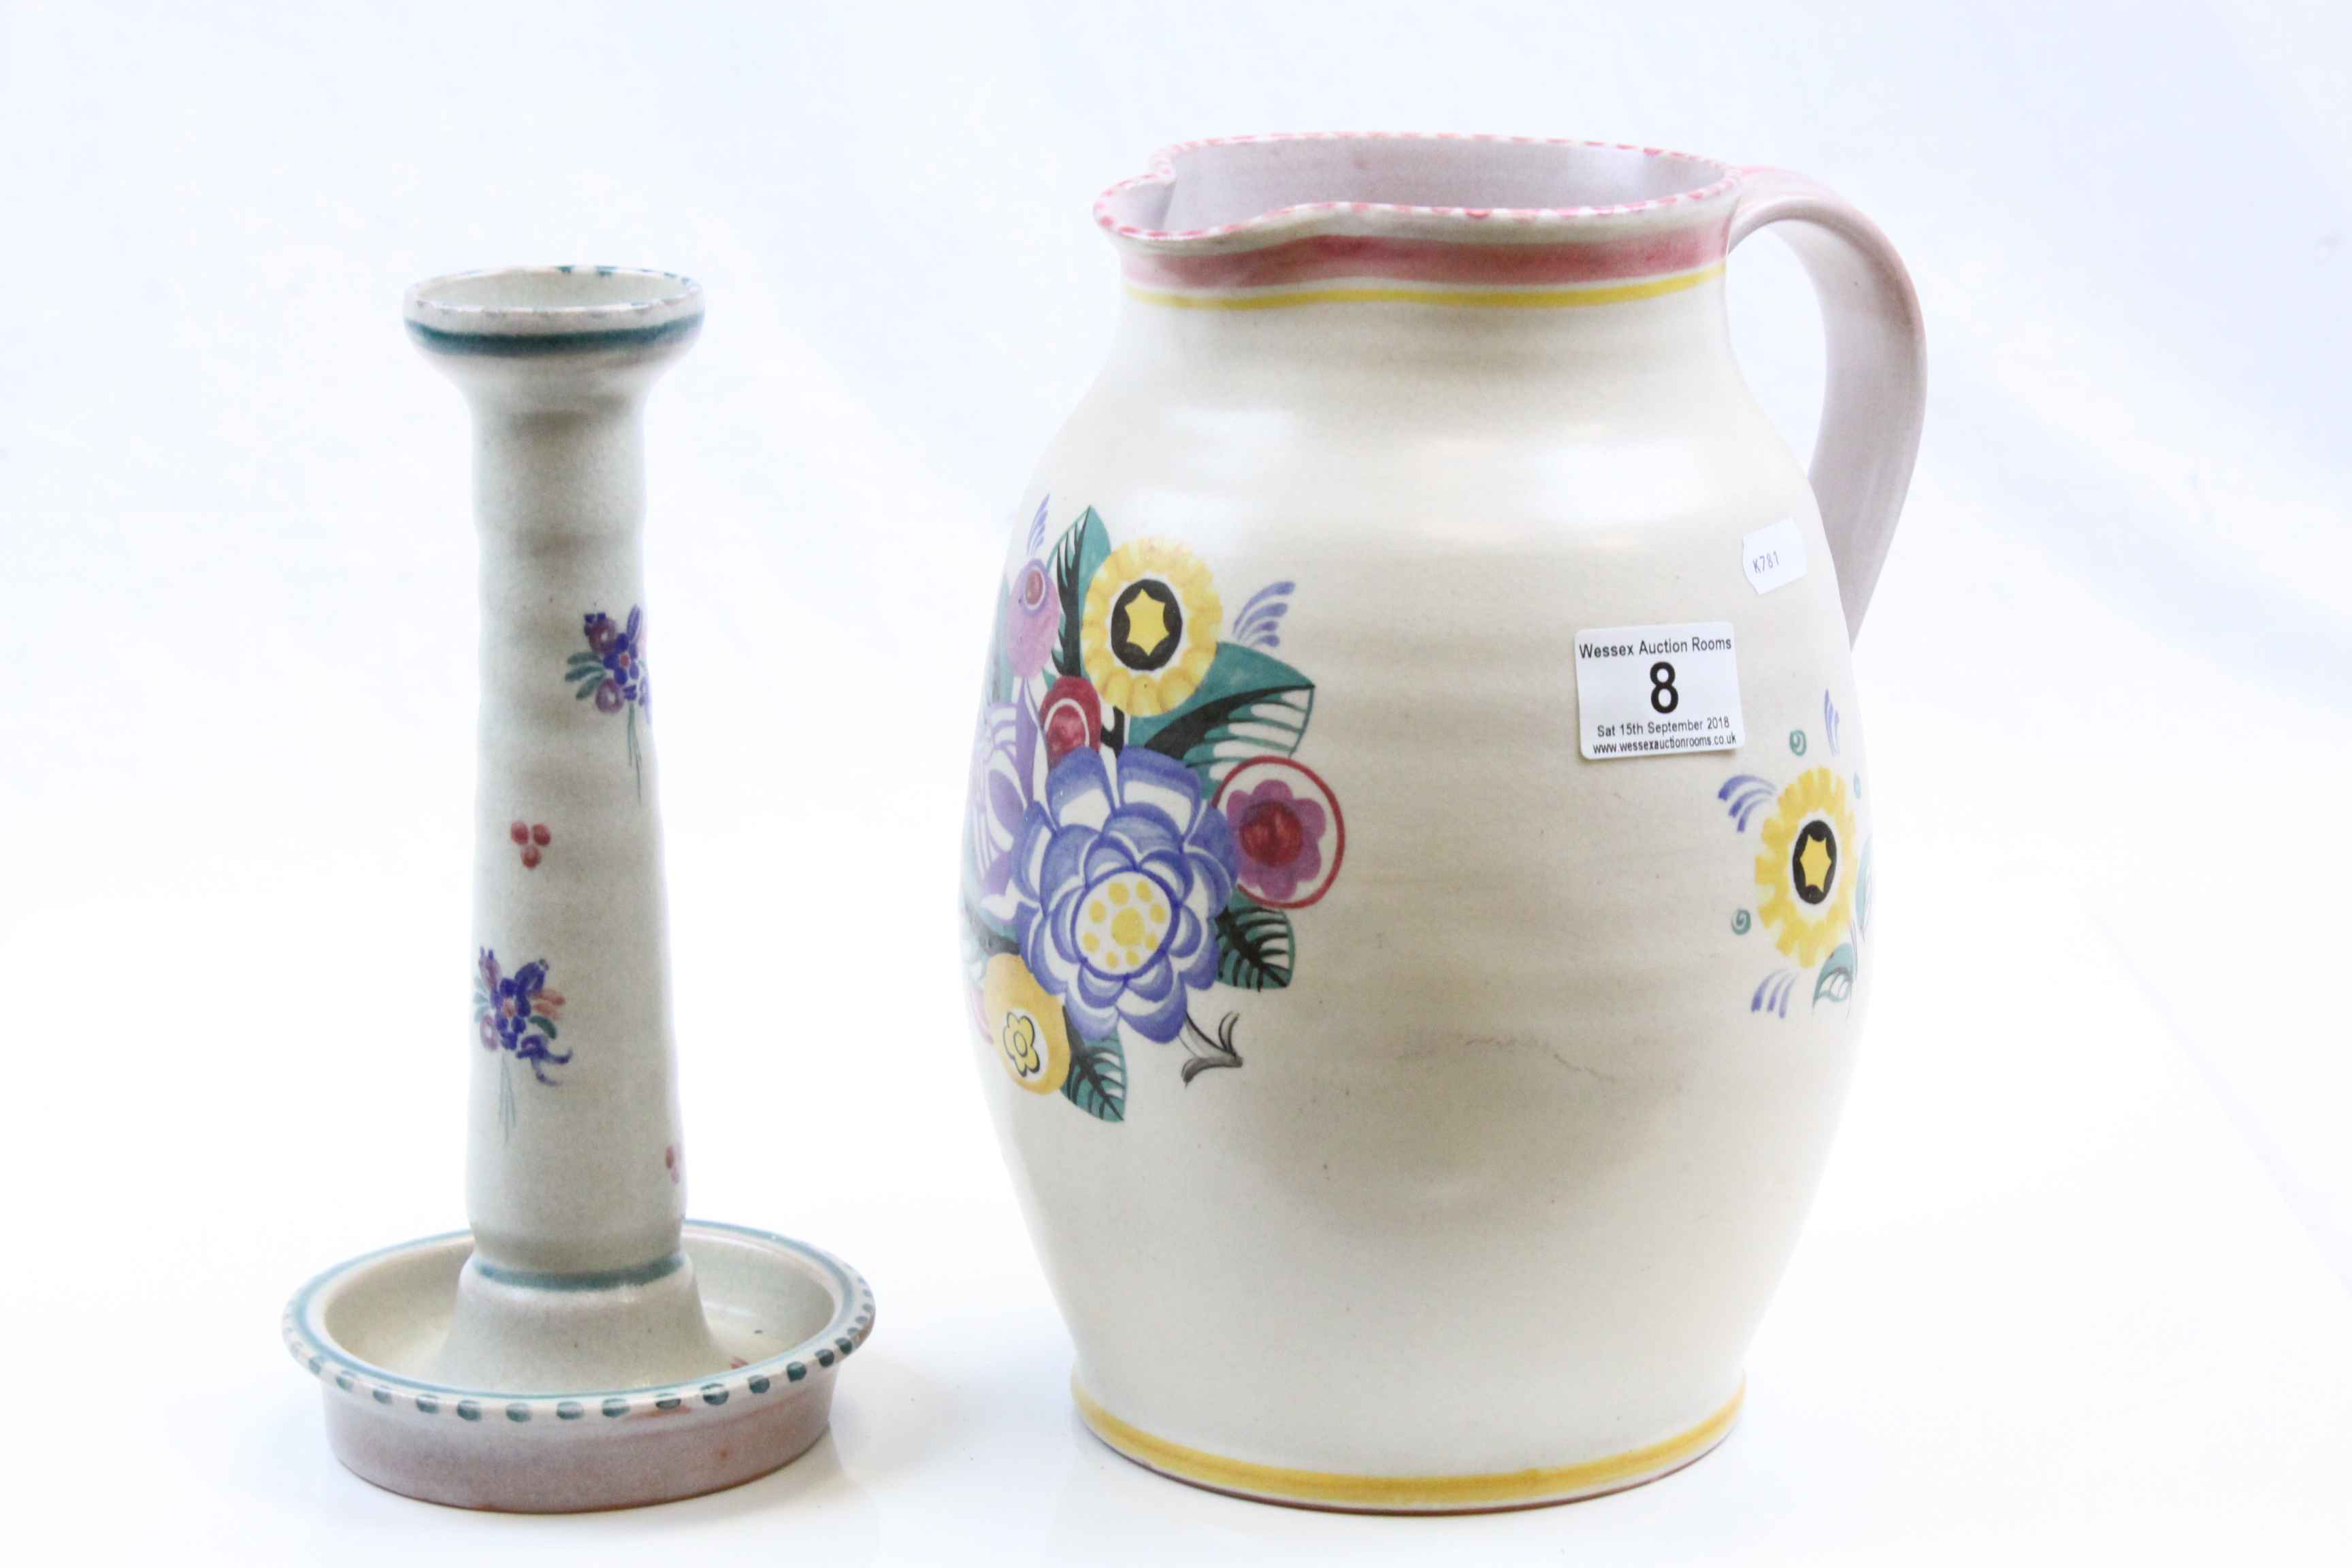 Large Carter Stabler Adams Poole Pottery jug, numbered 263 & similar candlestick numbered 256